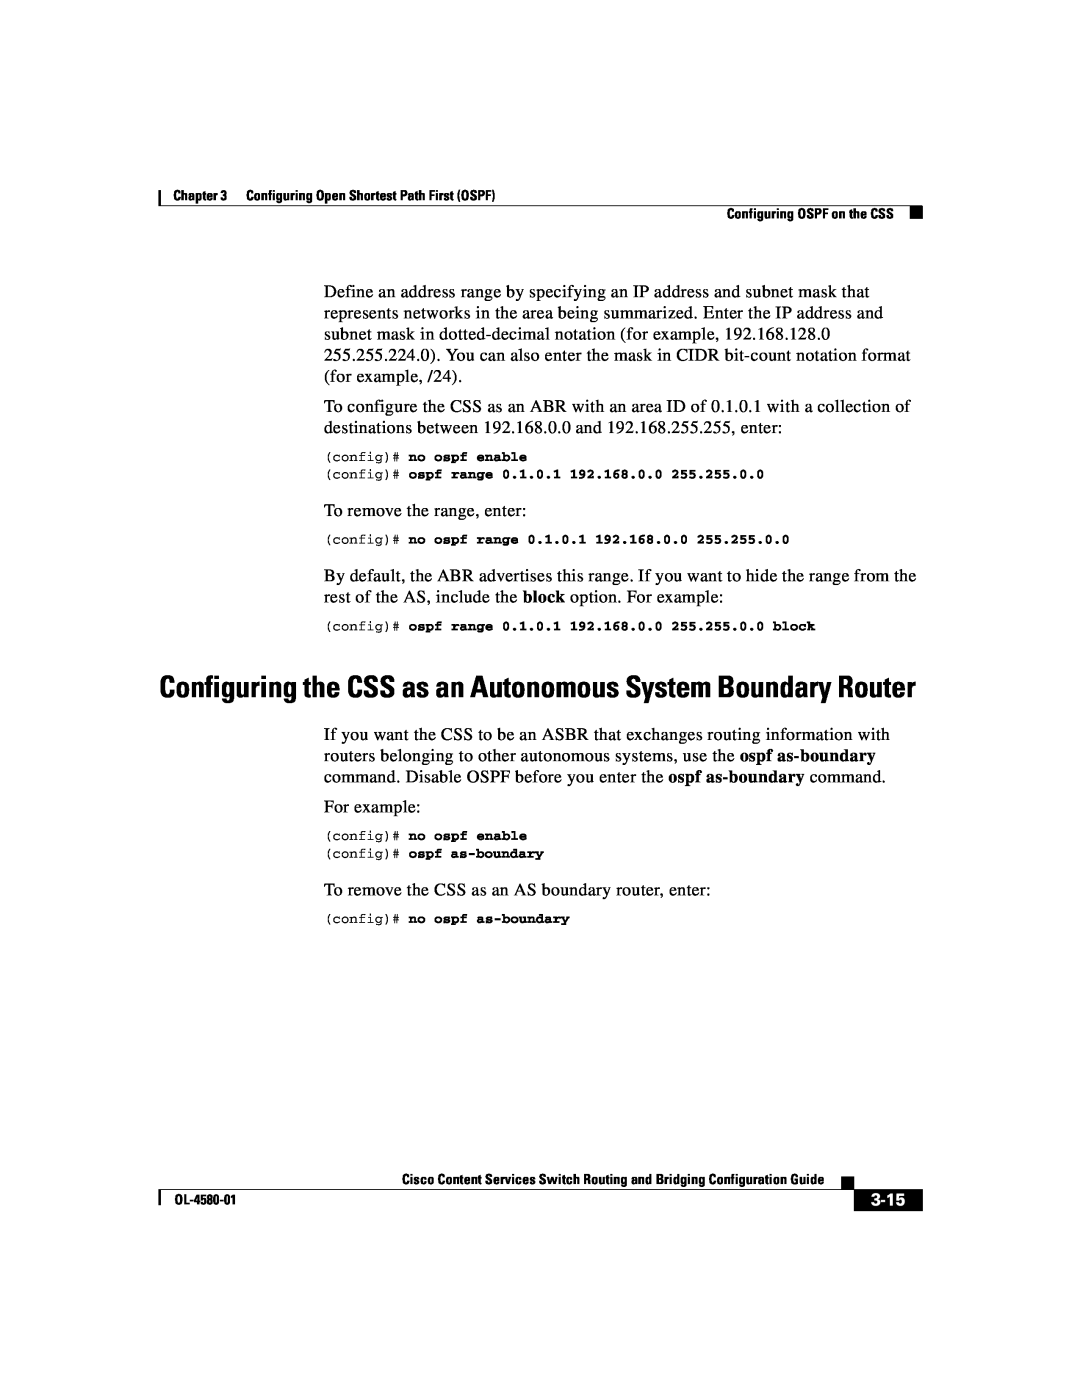 Cisco Systems OL-4580-01 Configuring the CSS as an Autonomous System Boundary Router, 3-15, config# no ospf as-boundary 